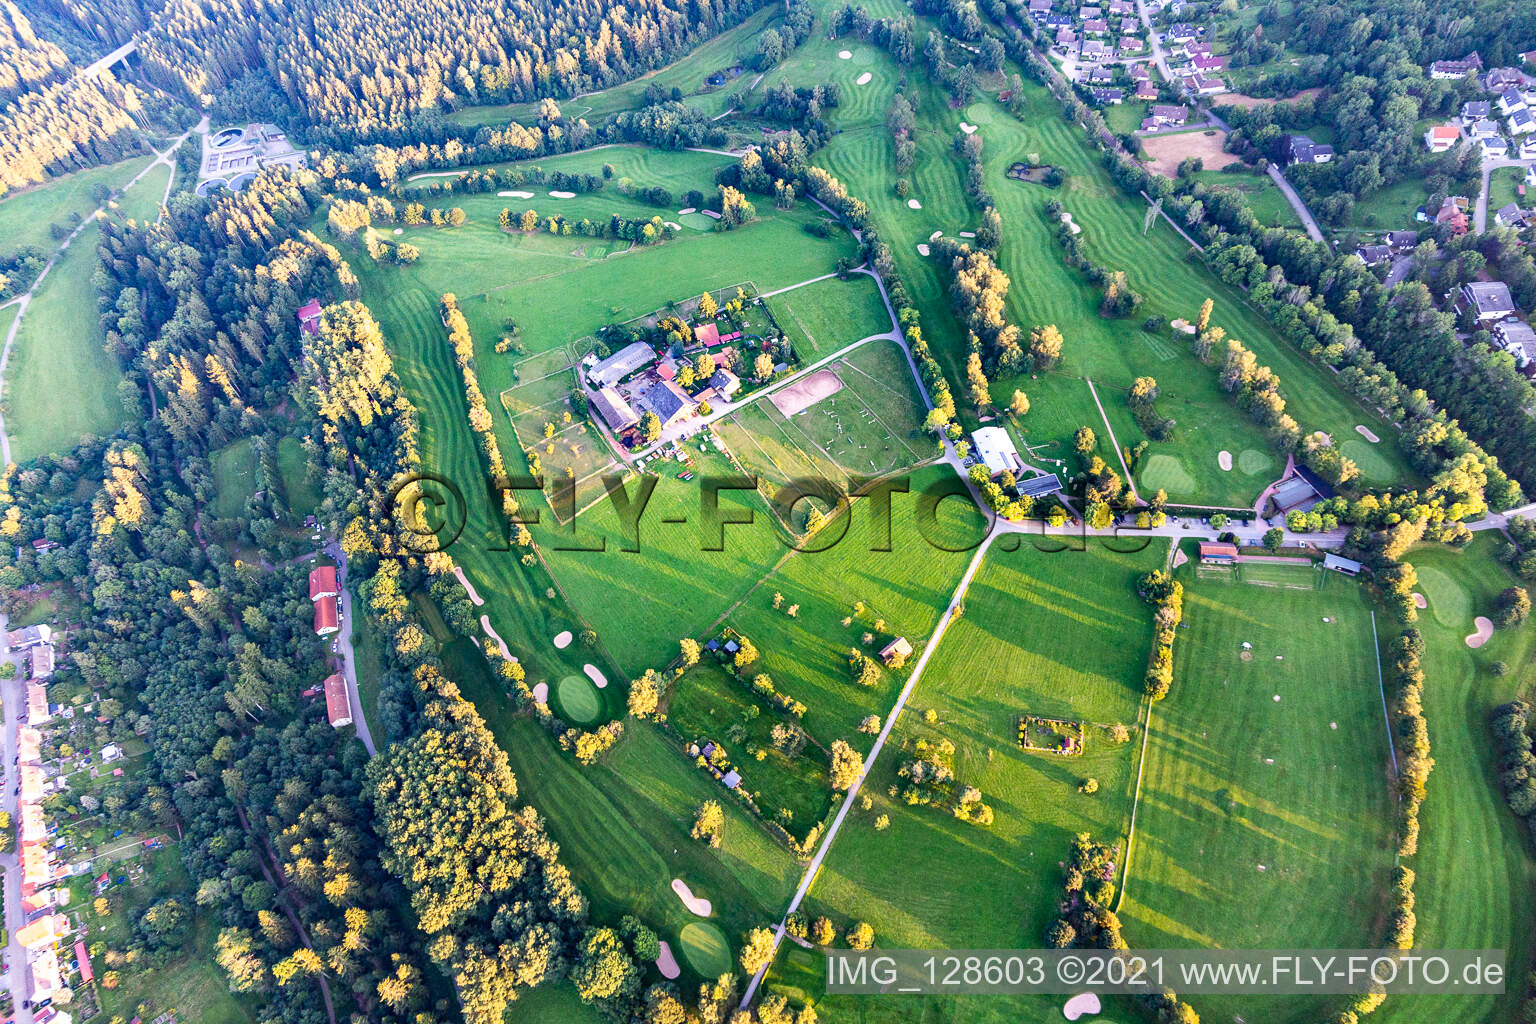 Vue aérienne de Club de golf Freudenstadt eV, Wellerhof Thomas Weller à Freudenstadt dans le département Bade-Wurtemberg, Allemagne